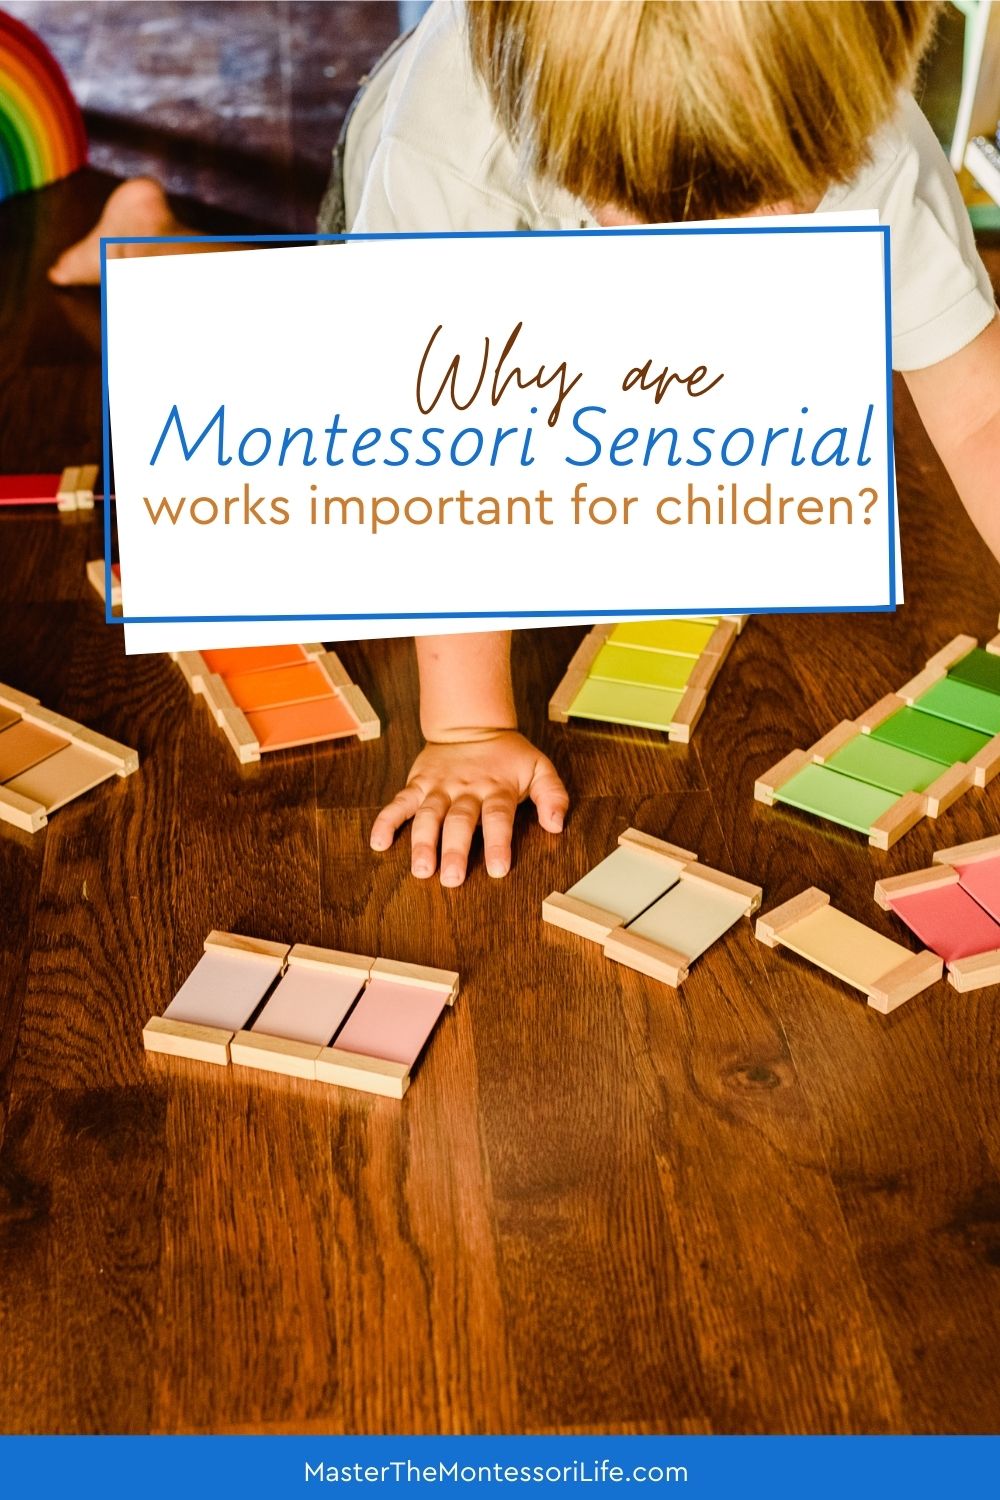 Why are Montessori Sensorial works important for children?